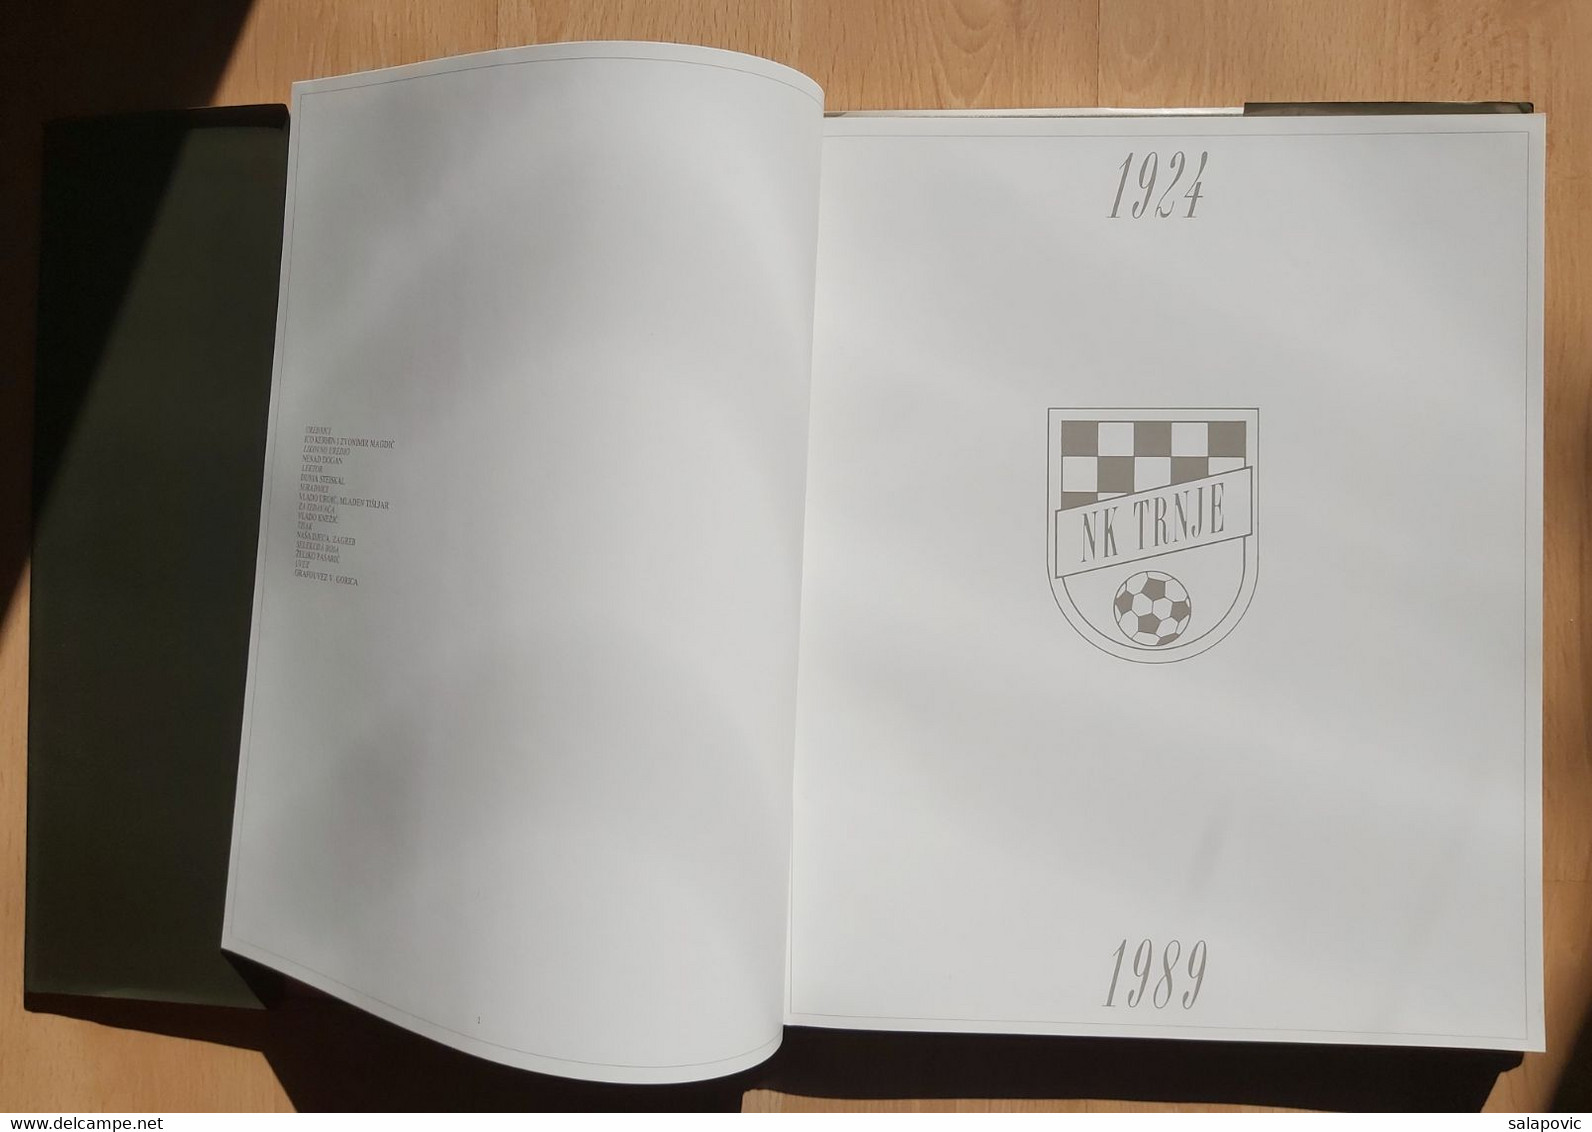 NK Trnje 1924-1989 Football Club, Croatia - Libri